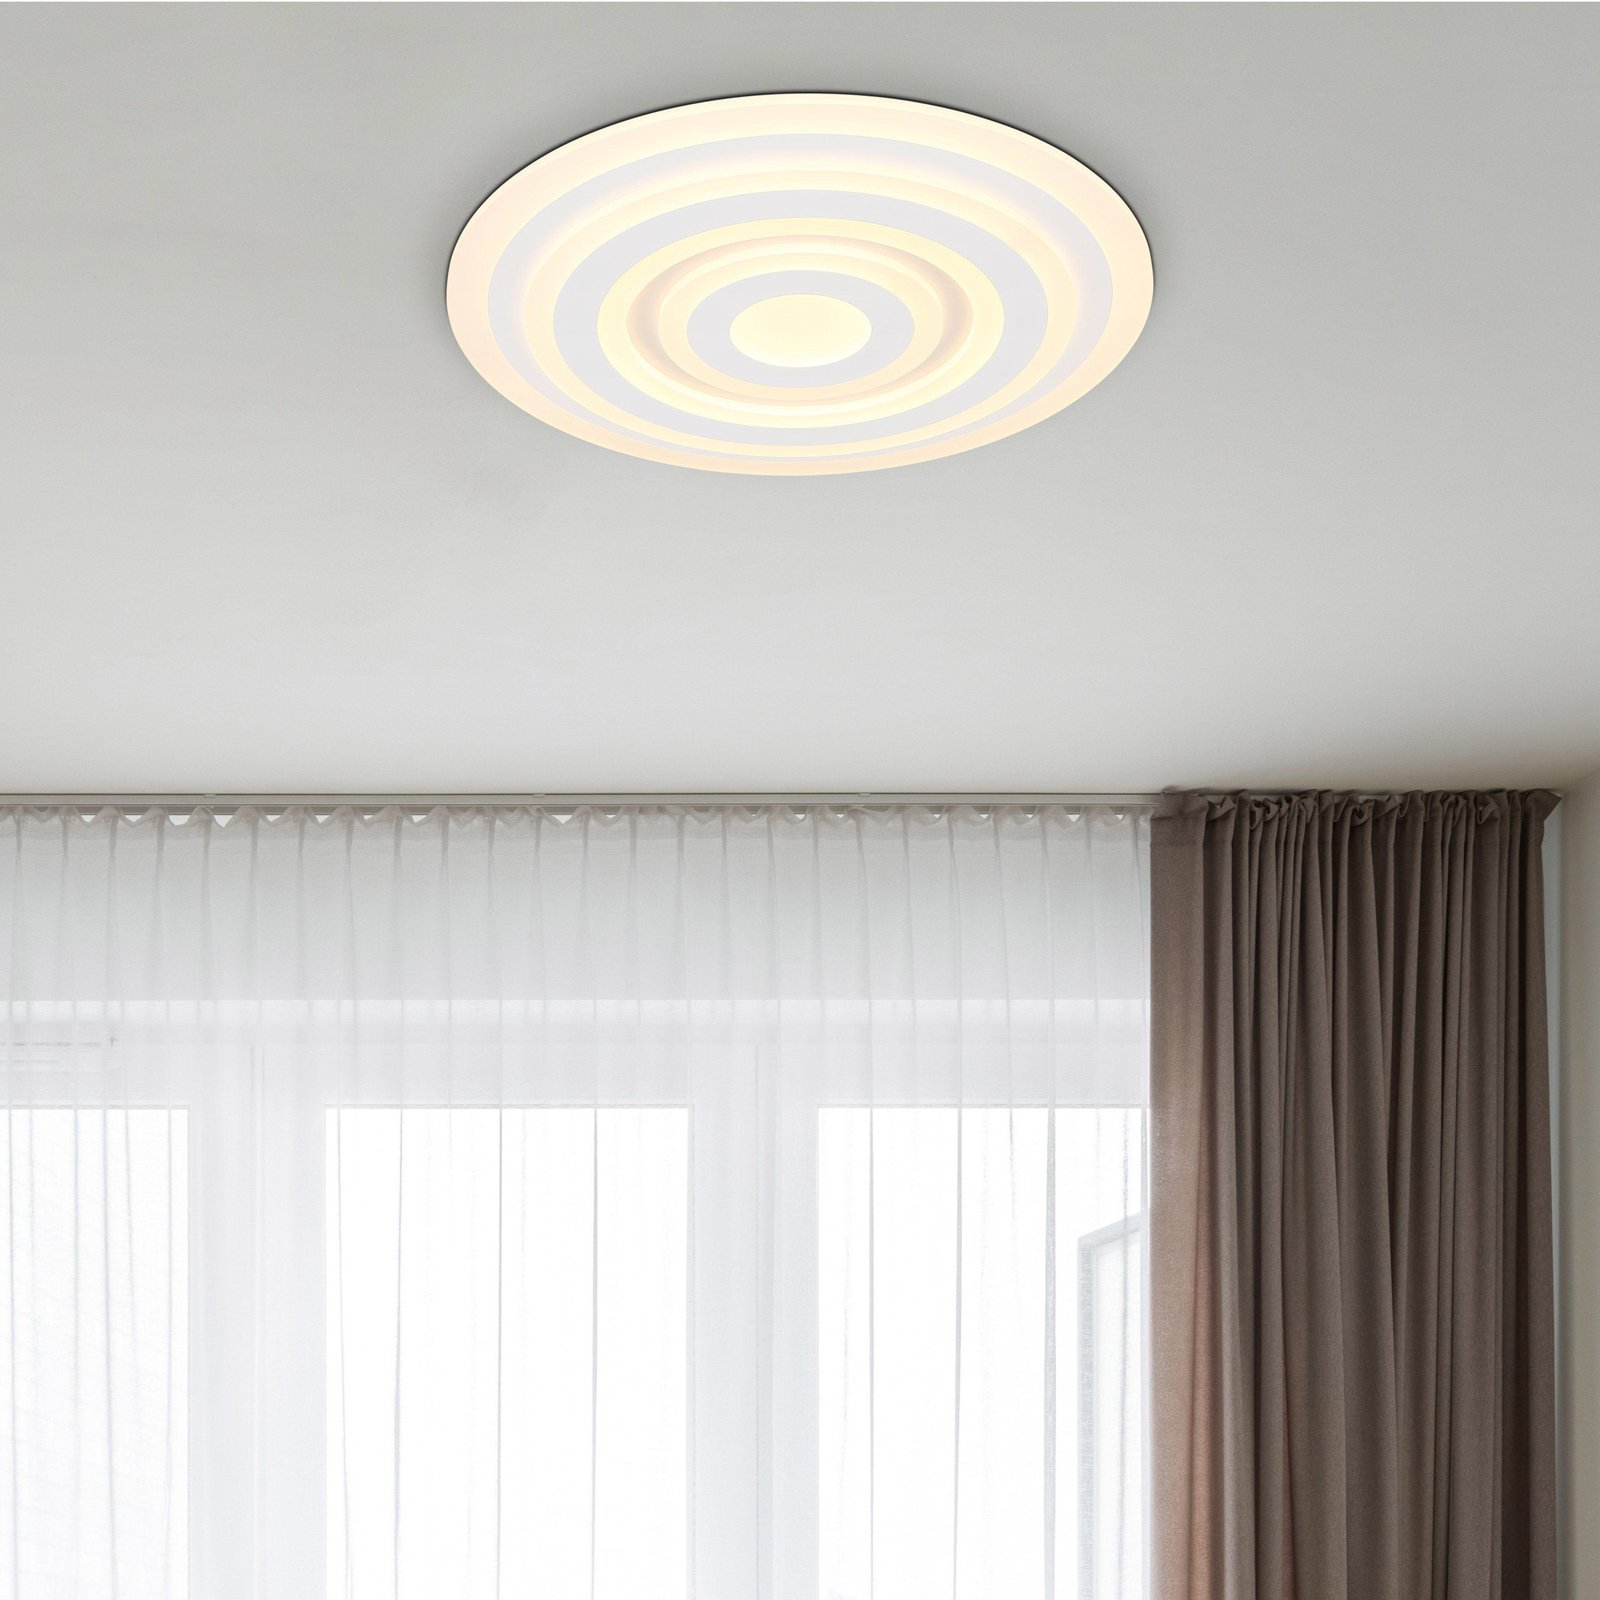 LED ceiling light Alois, white, Ø 49 cm, metal/acrylic